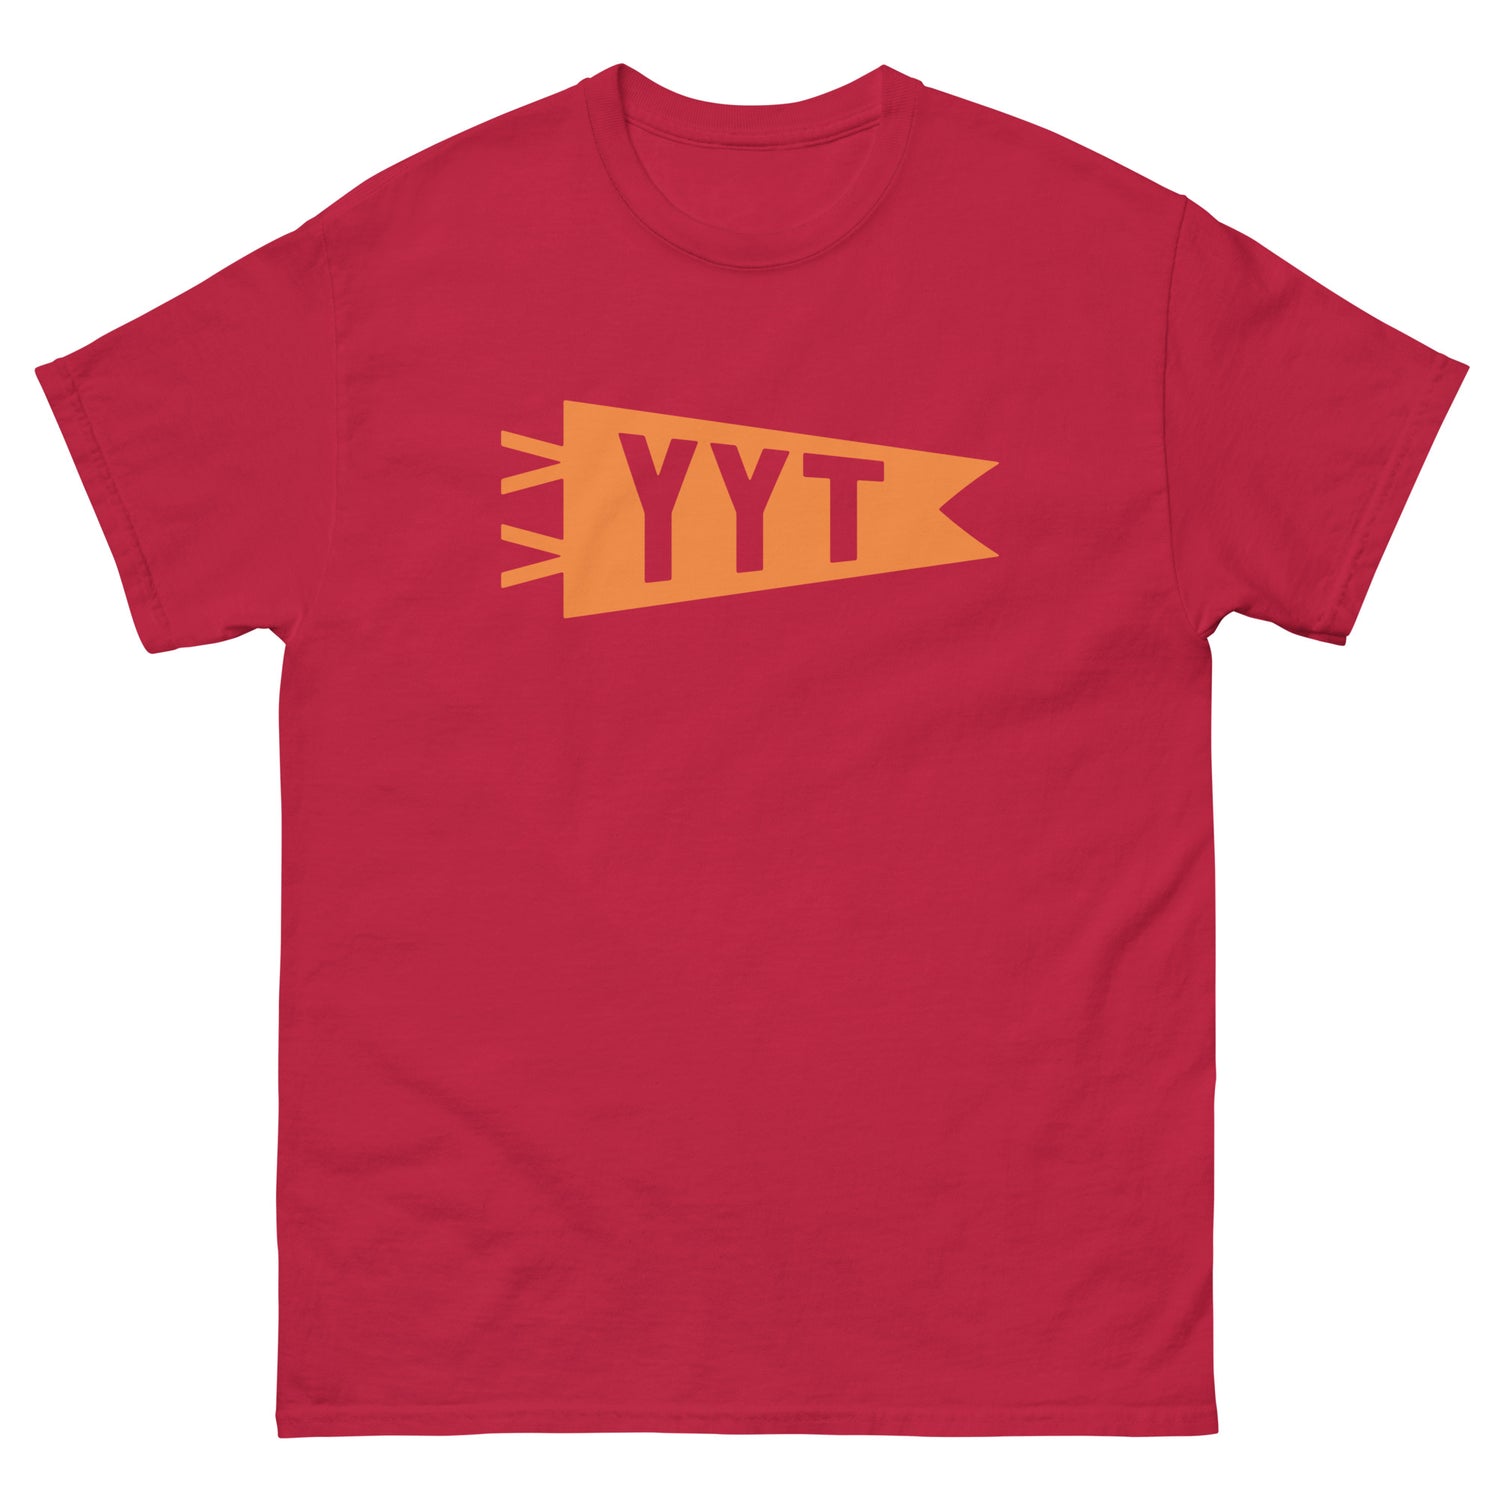 St. John's Newfoundland and Labrador Adult T-Shirts • YYT Airport Code